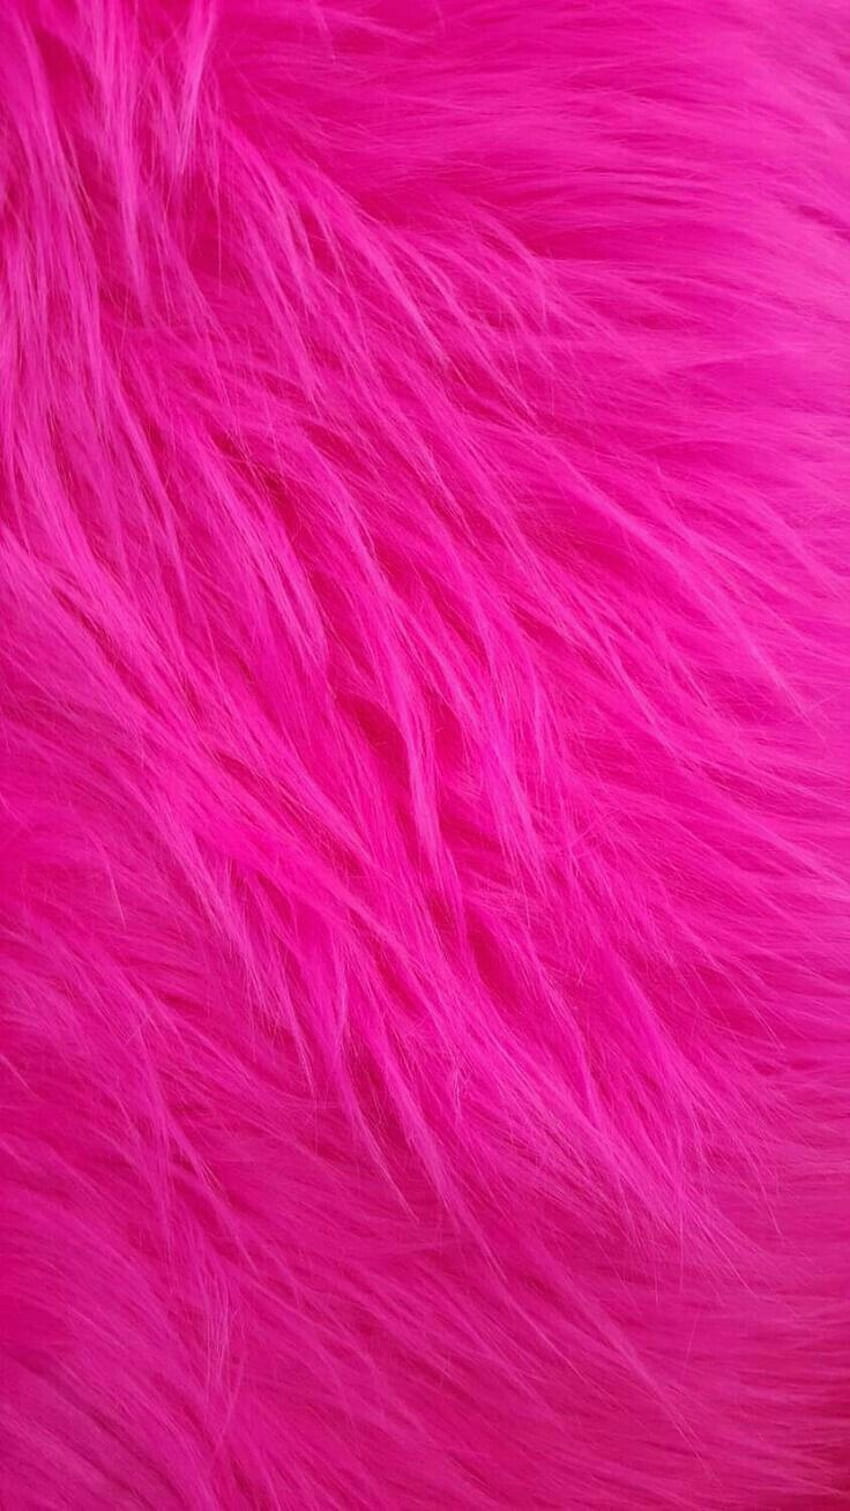 Pink Fur . Fondo de pantalla rosado para iphone, Fondos de brillos, iPhone fondos de pantalla, Pink Fashion HD phone wallpaper